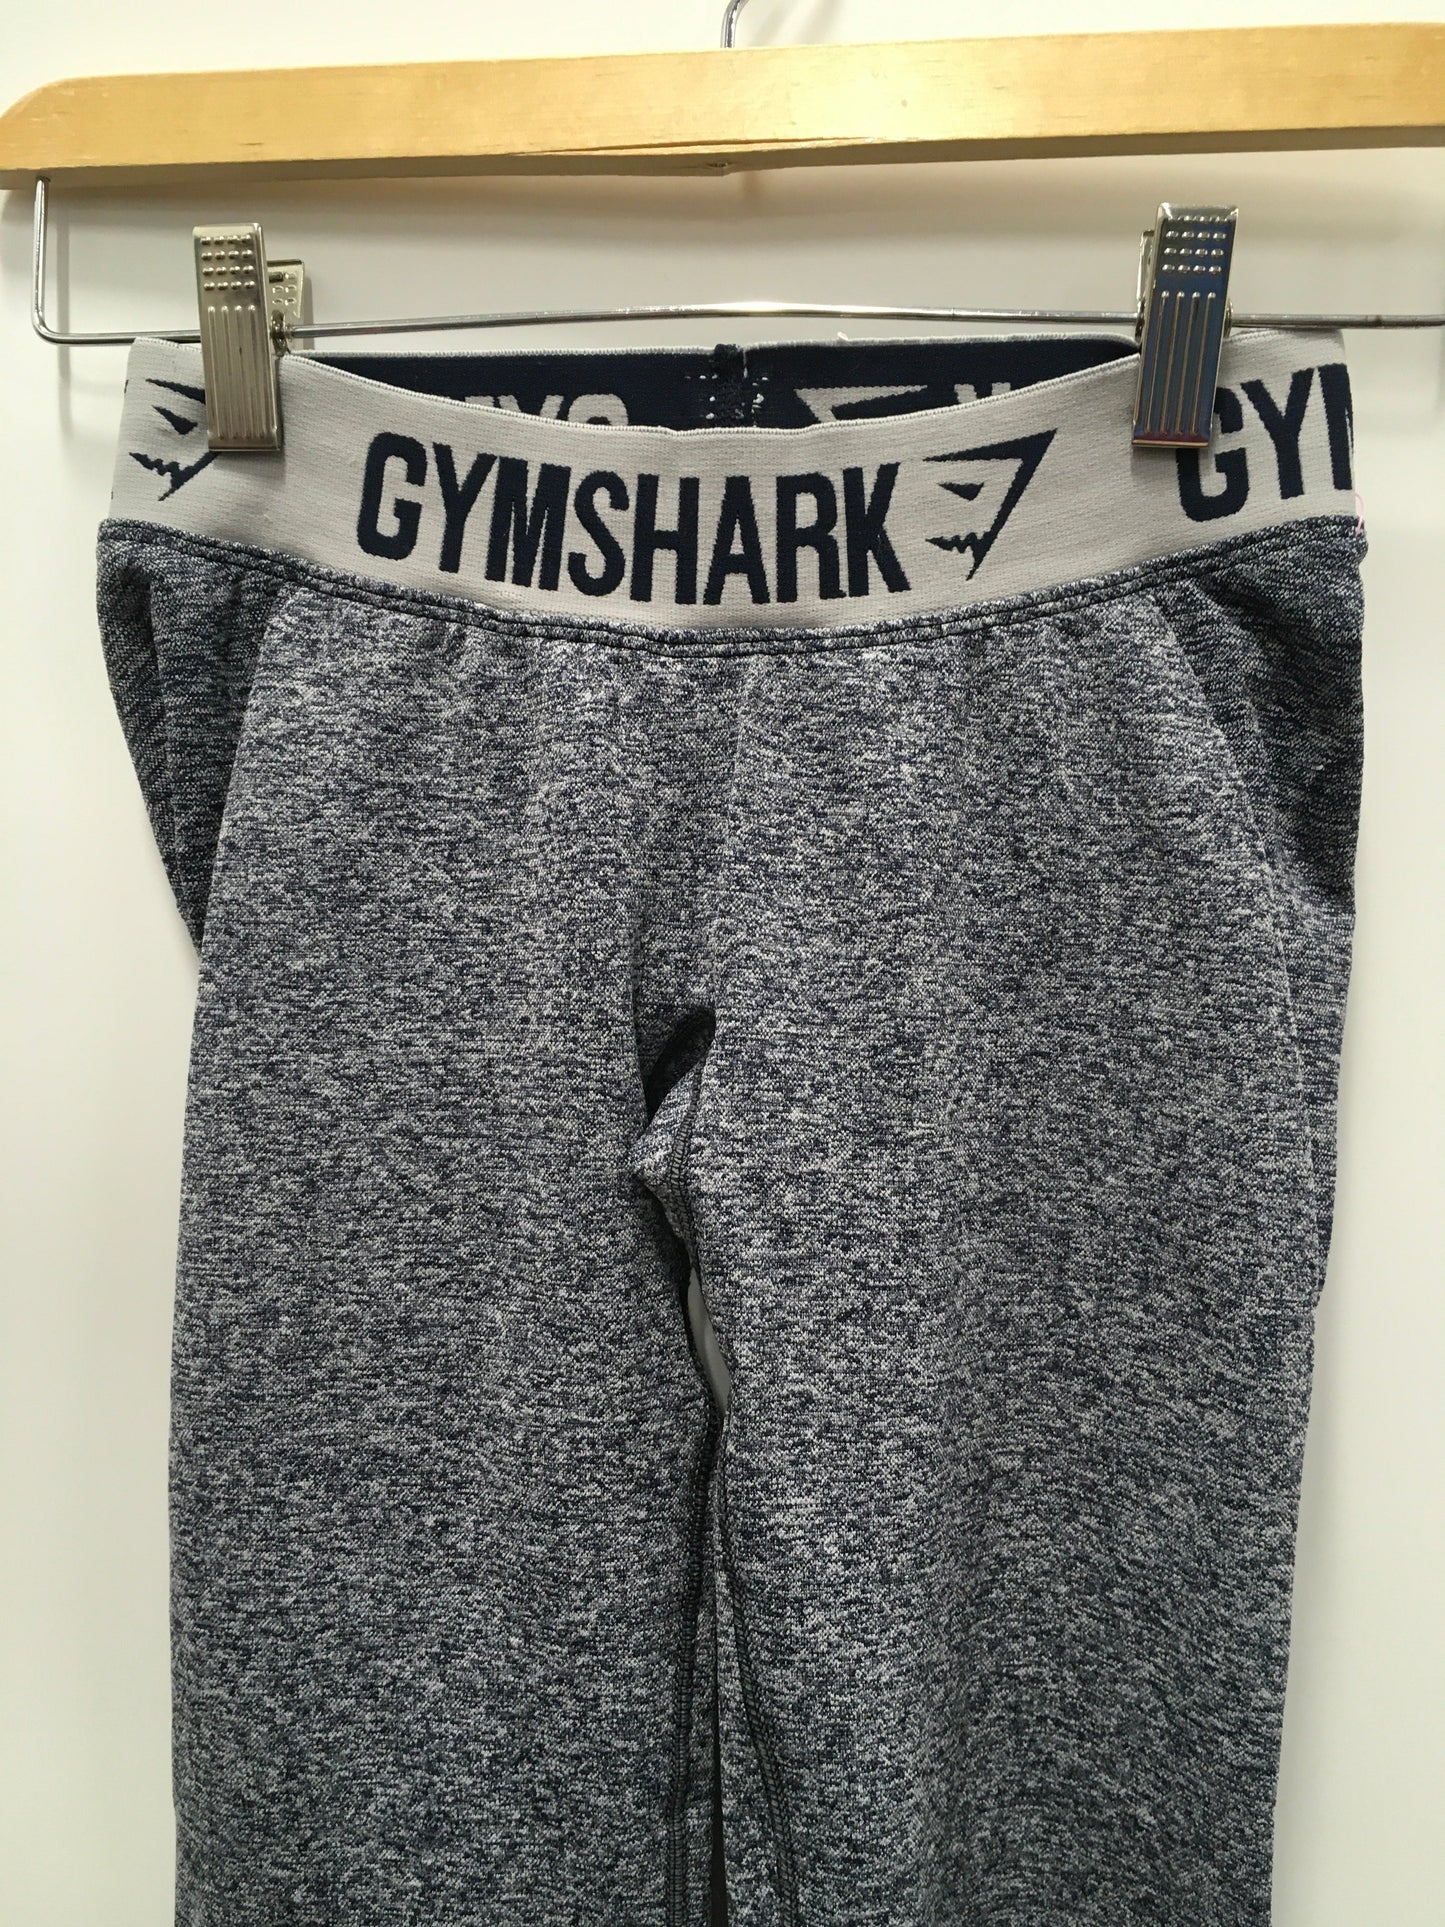 Navy Athletic Leggings Gym Shark, Size Xs